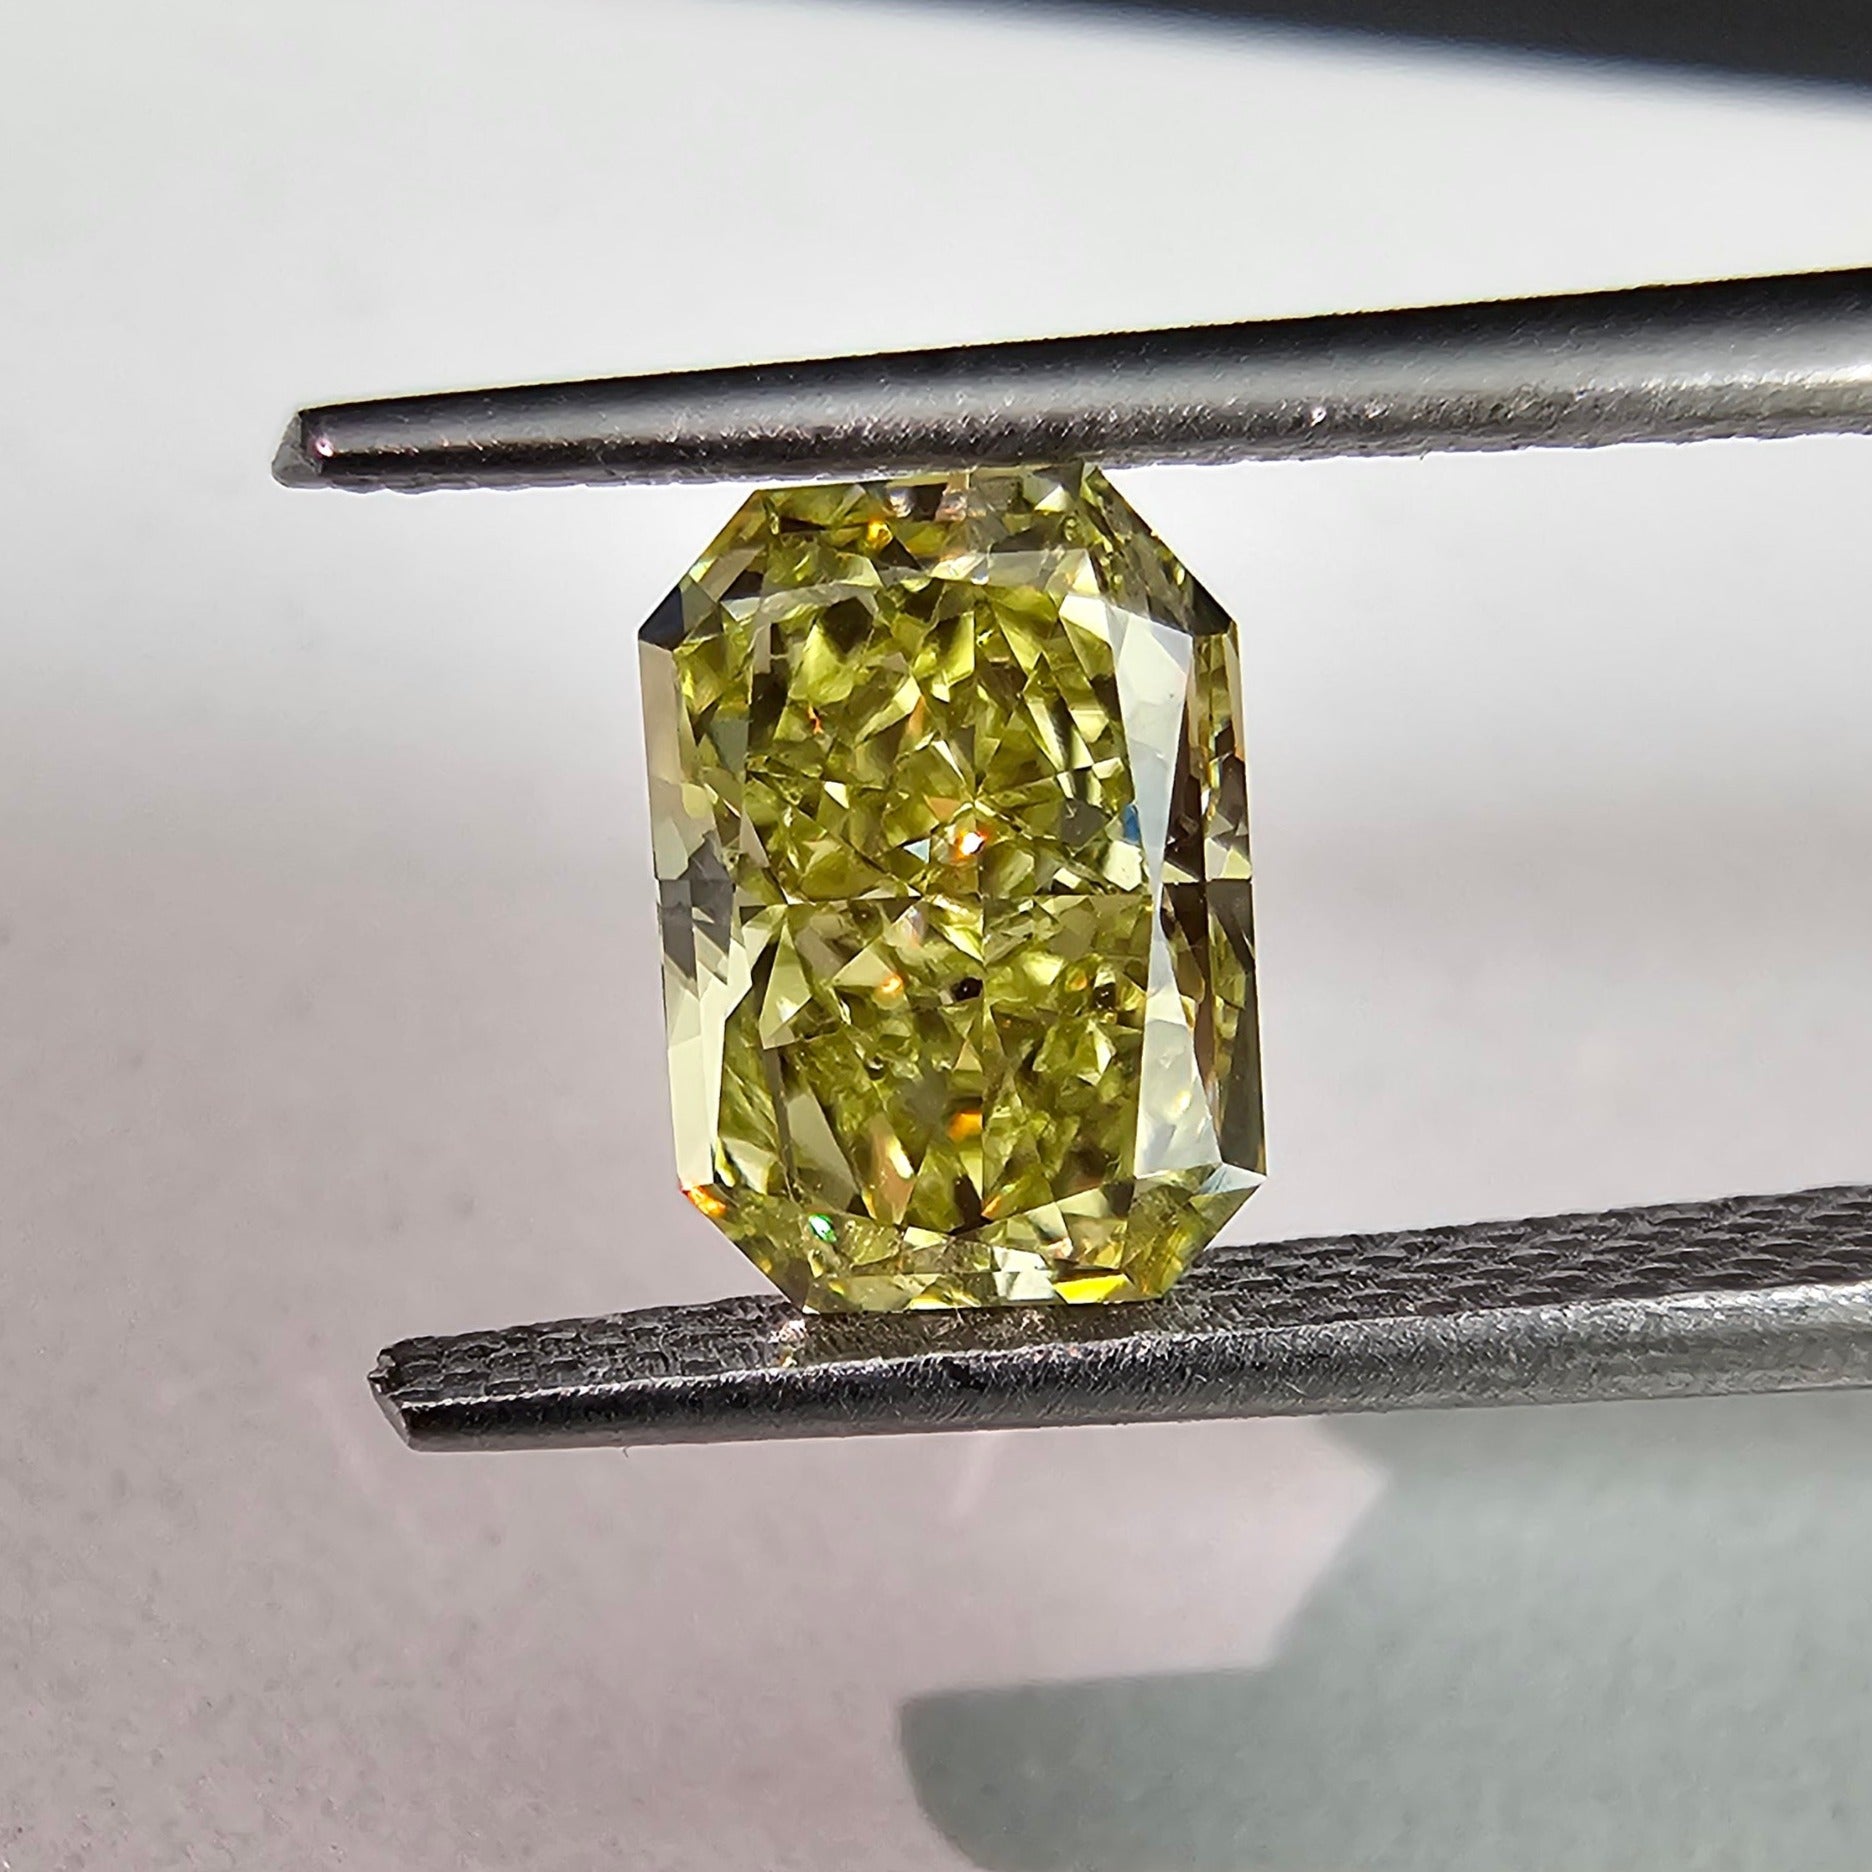 1.12ct GIA Fancy Intense Yellow Elongated Radiant Diamond - Loose